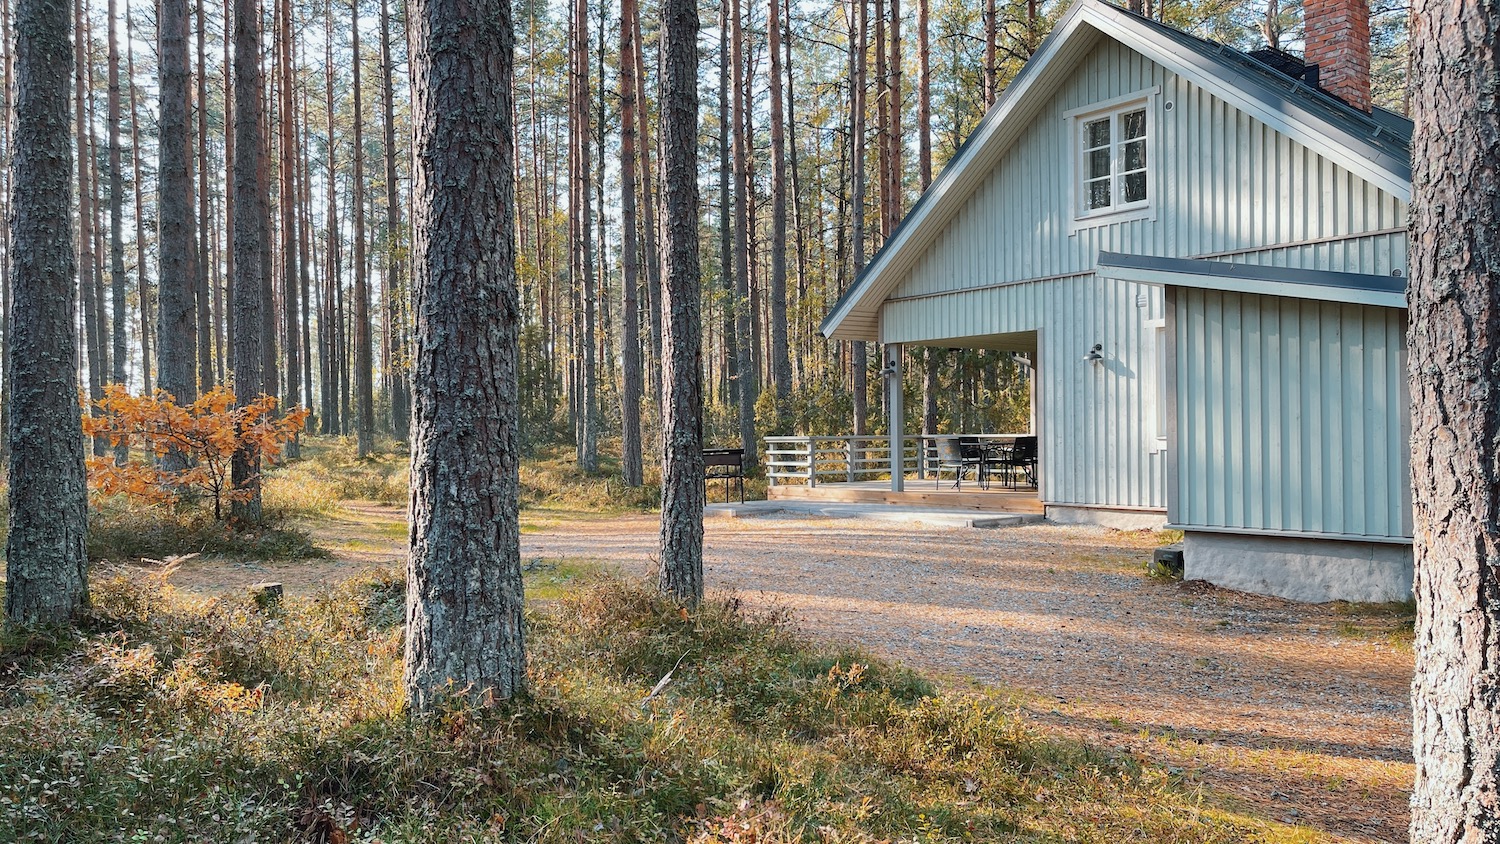 Estonian Peipsi holiday homes, best holiday homes in Estonia